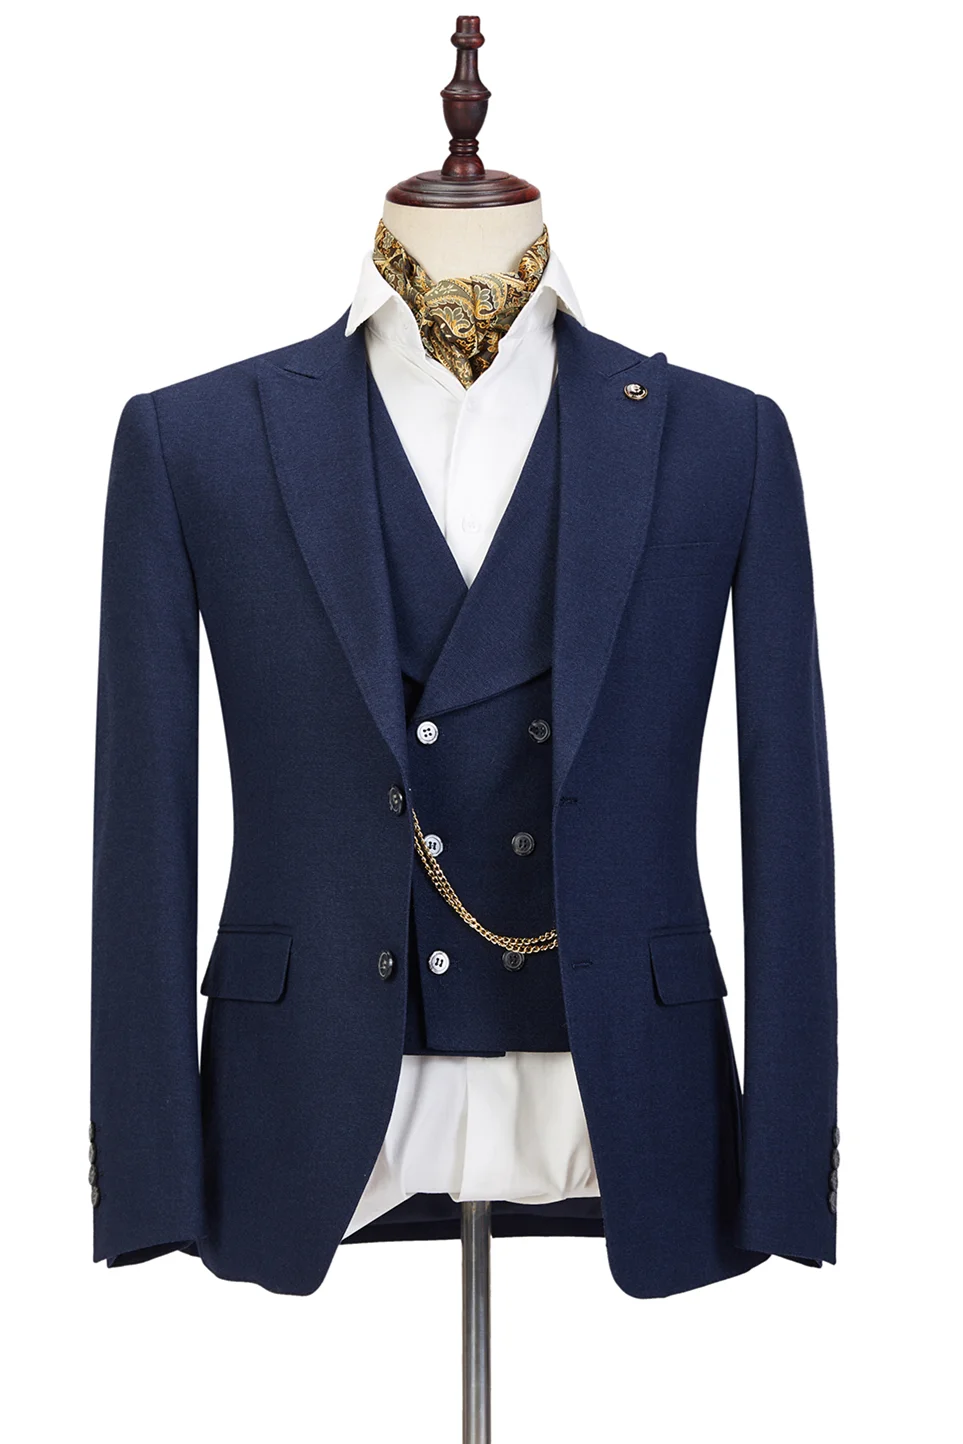 Daisda Dark Blue Three-Piece Peaked Lapel Wedding Suit For Men